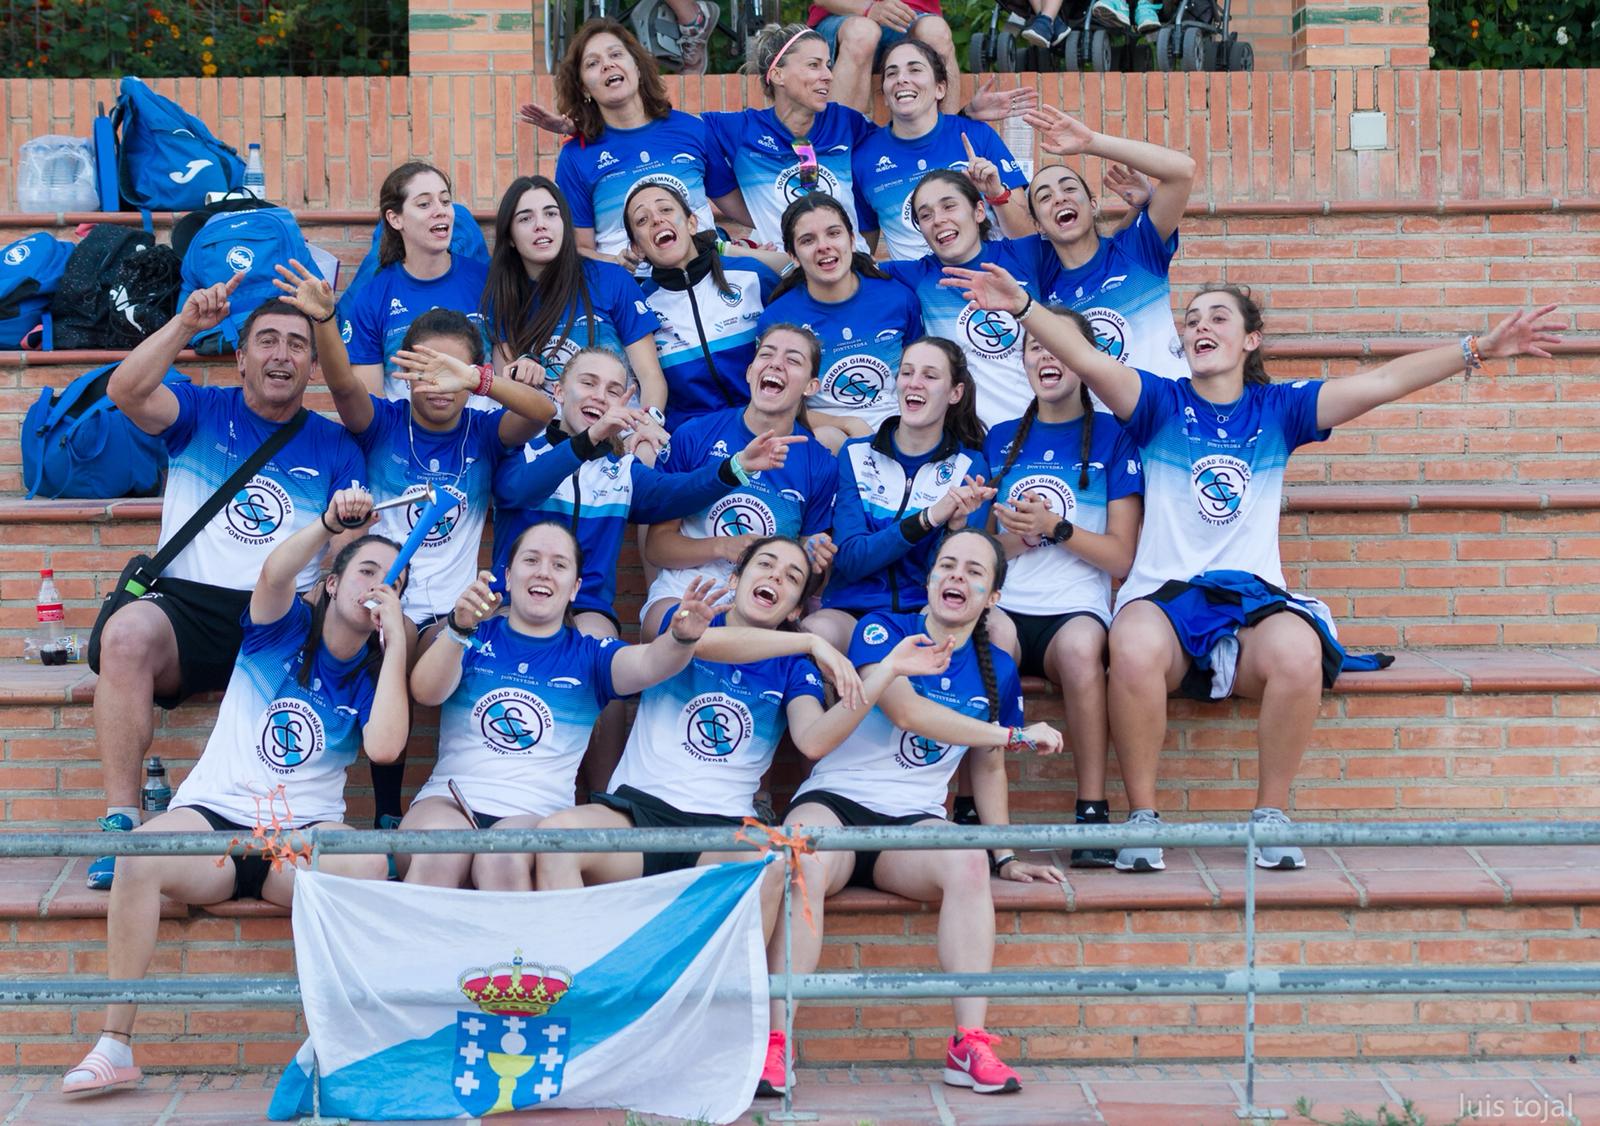 Equipo femenino en la última jornada de la Liga Iberdrola de la temporada pasada | Foto: Luis Tojal